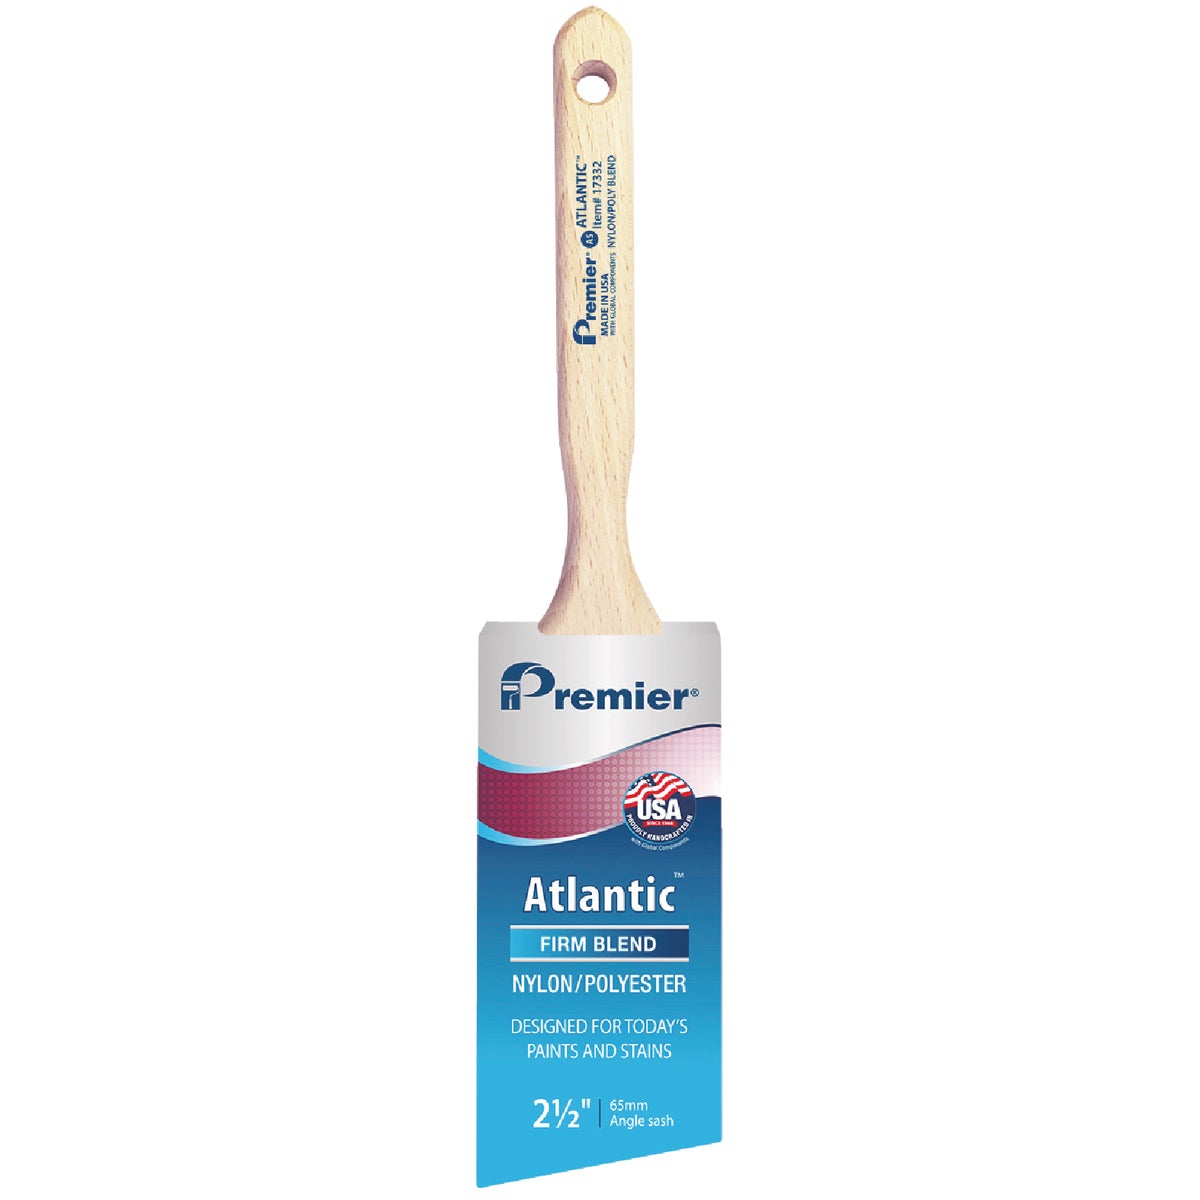 Premier Atlantic 2-1/2 In. Angle Sash Nylon/Poly Paint Brush